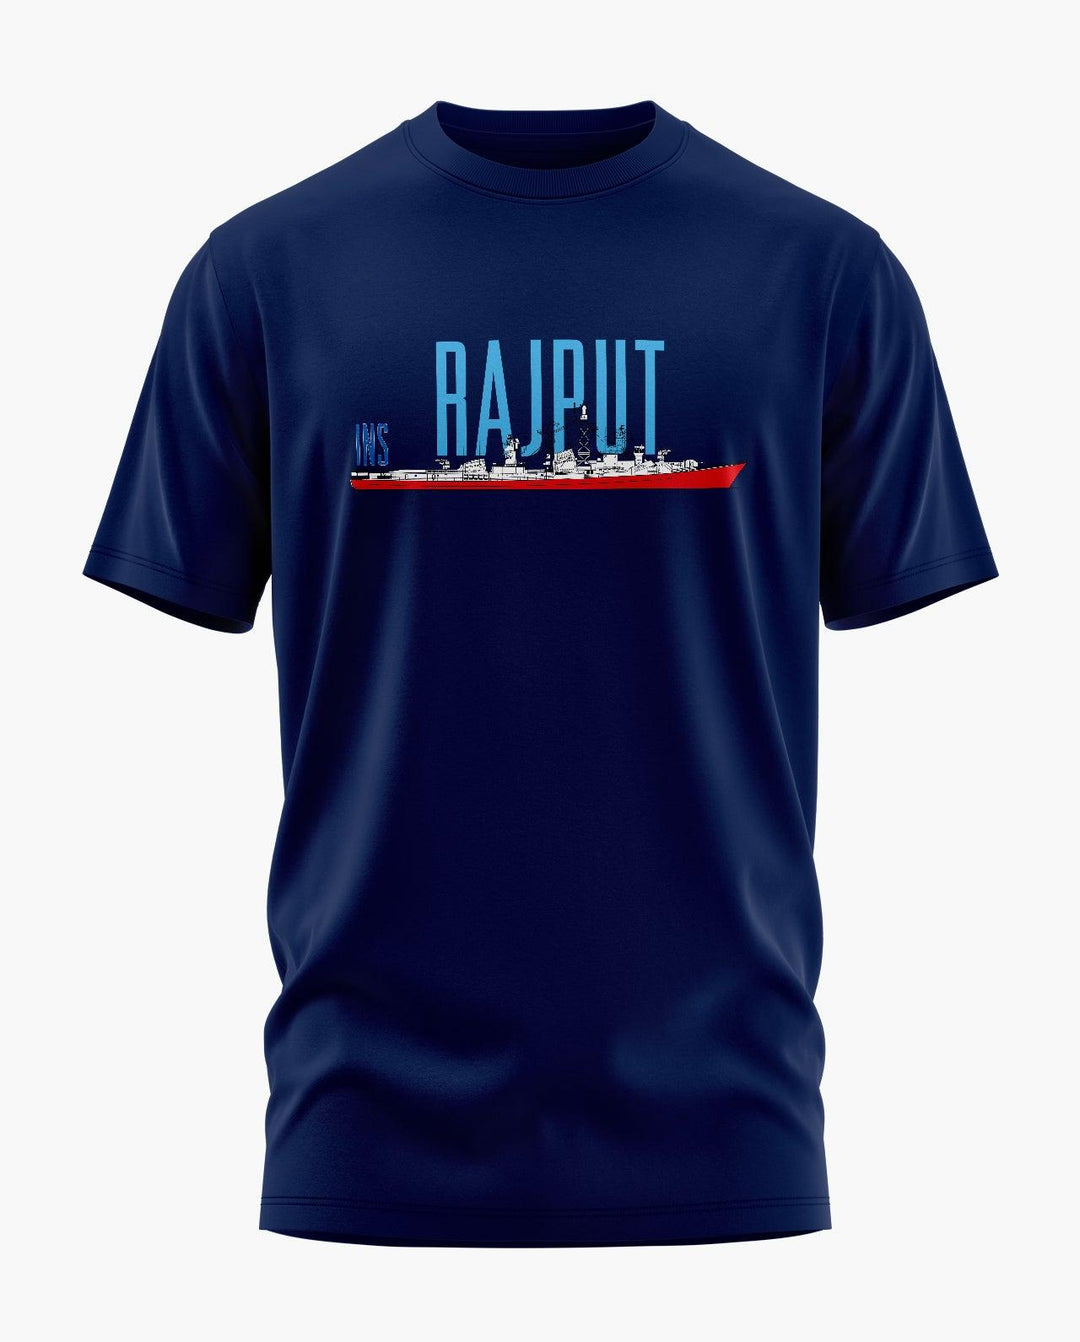 INS Rajput T-Shirt - Aero Armour